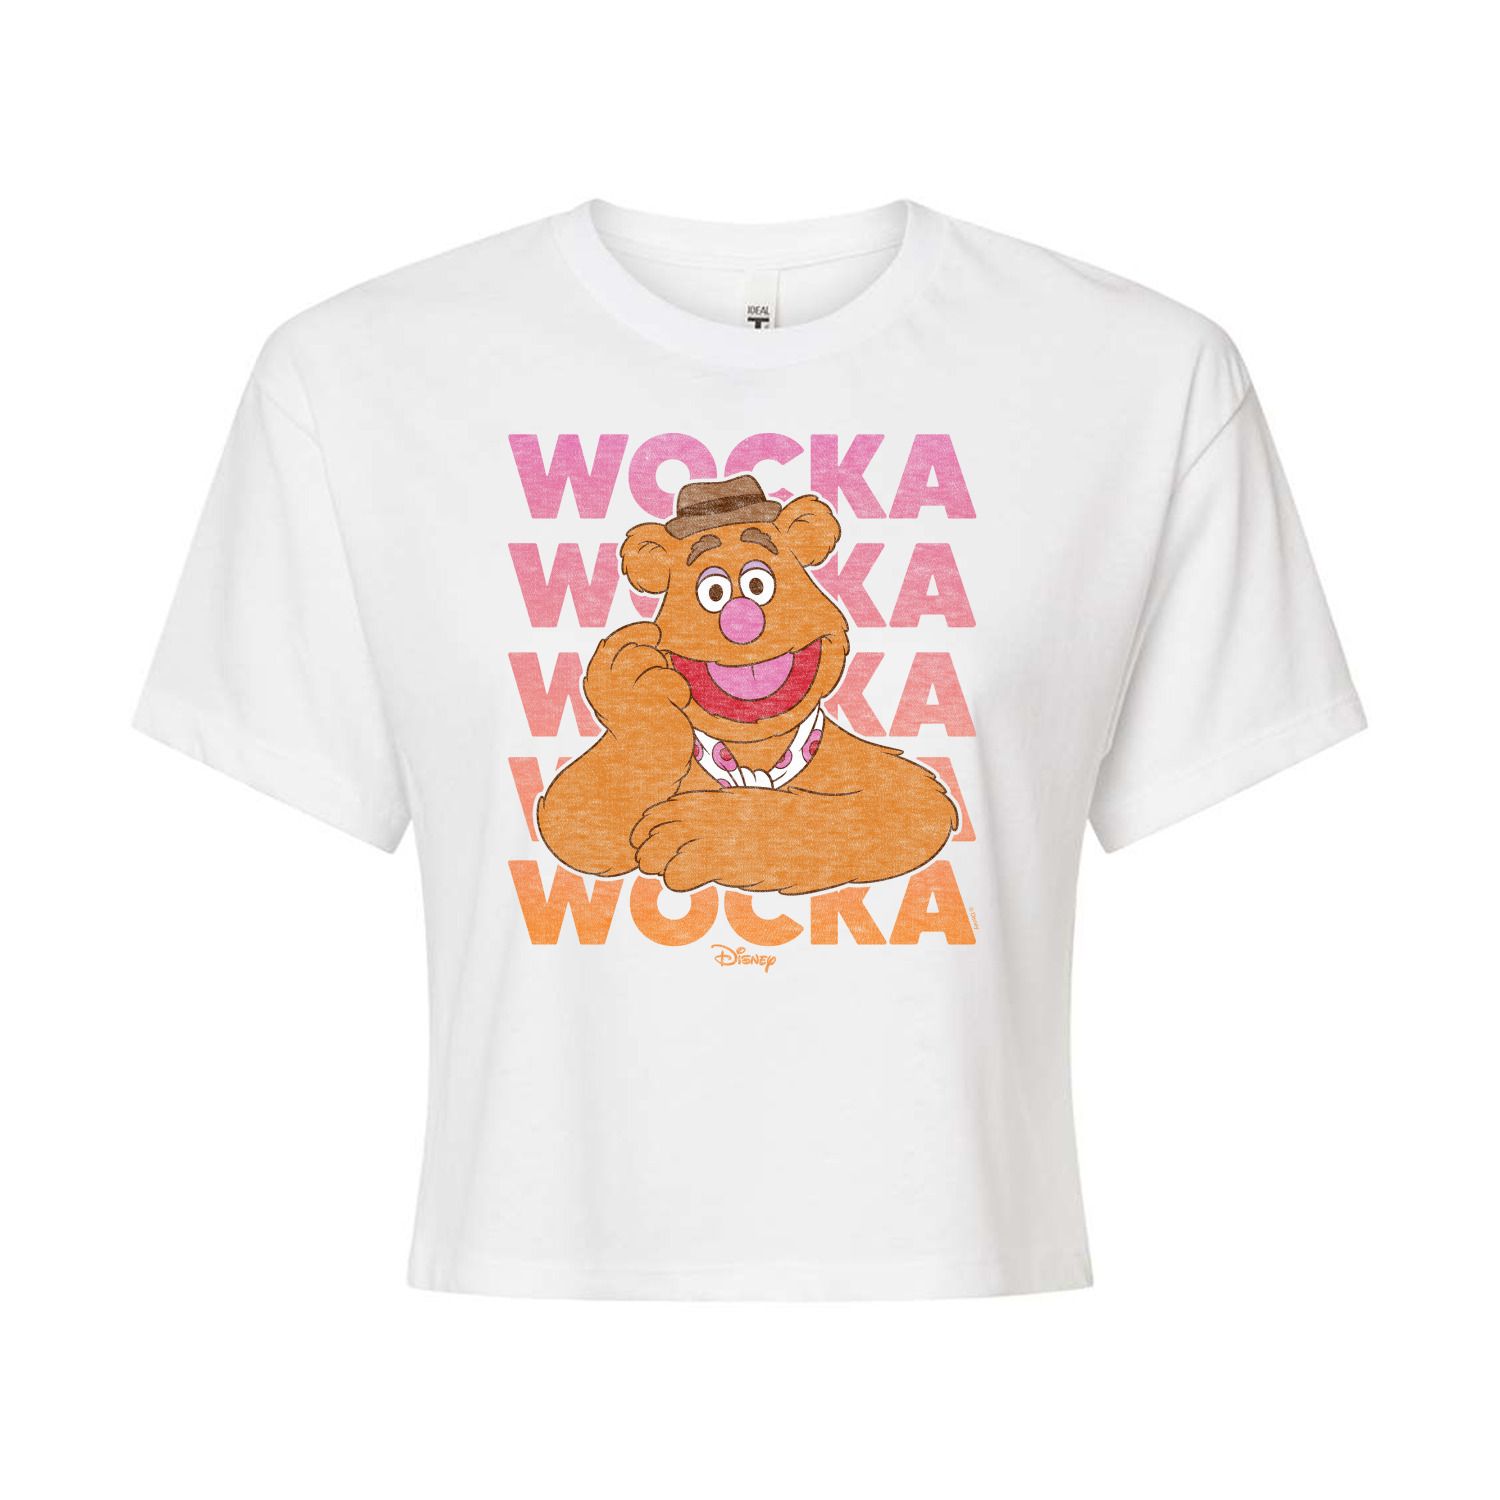 Укороченная футболка Disney's The Muppets Juniors Wocka Wocka Licensed Character